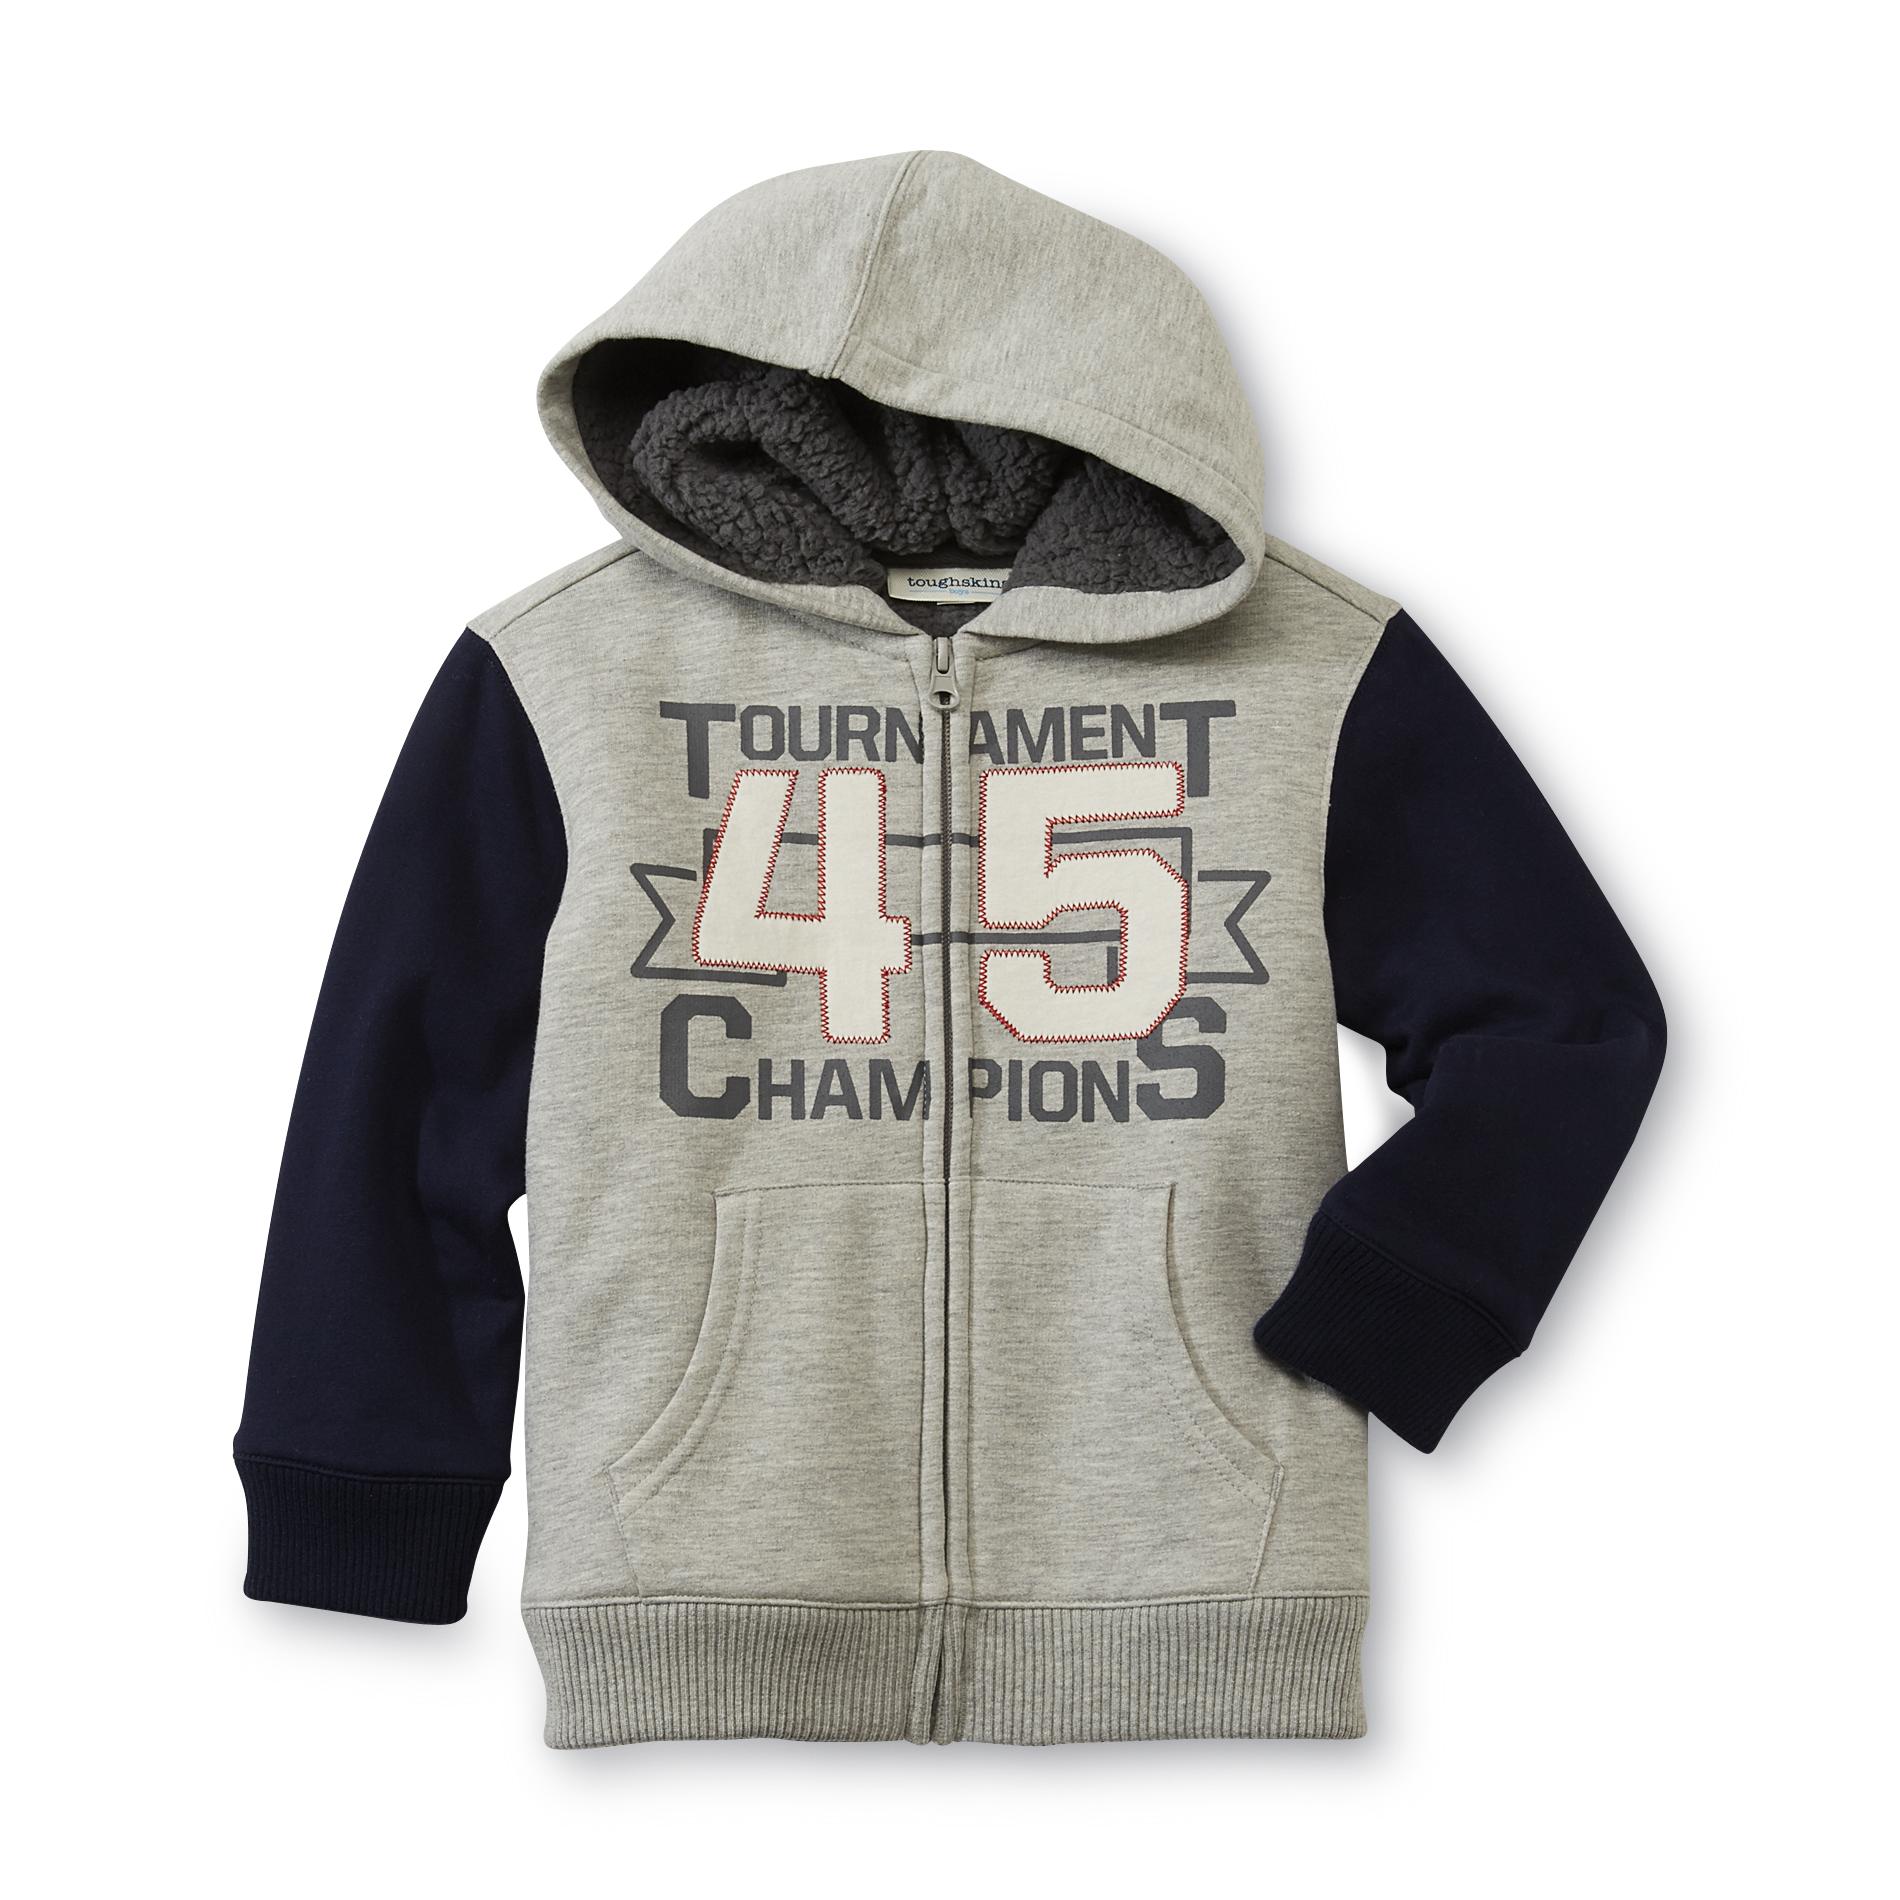 Toughskins Infant & Toddler Boy's Hoodie Jacket - Champions